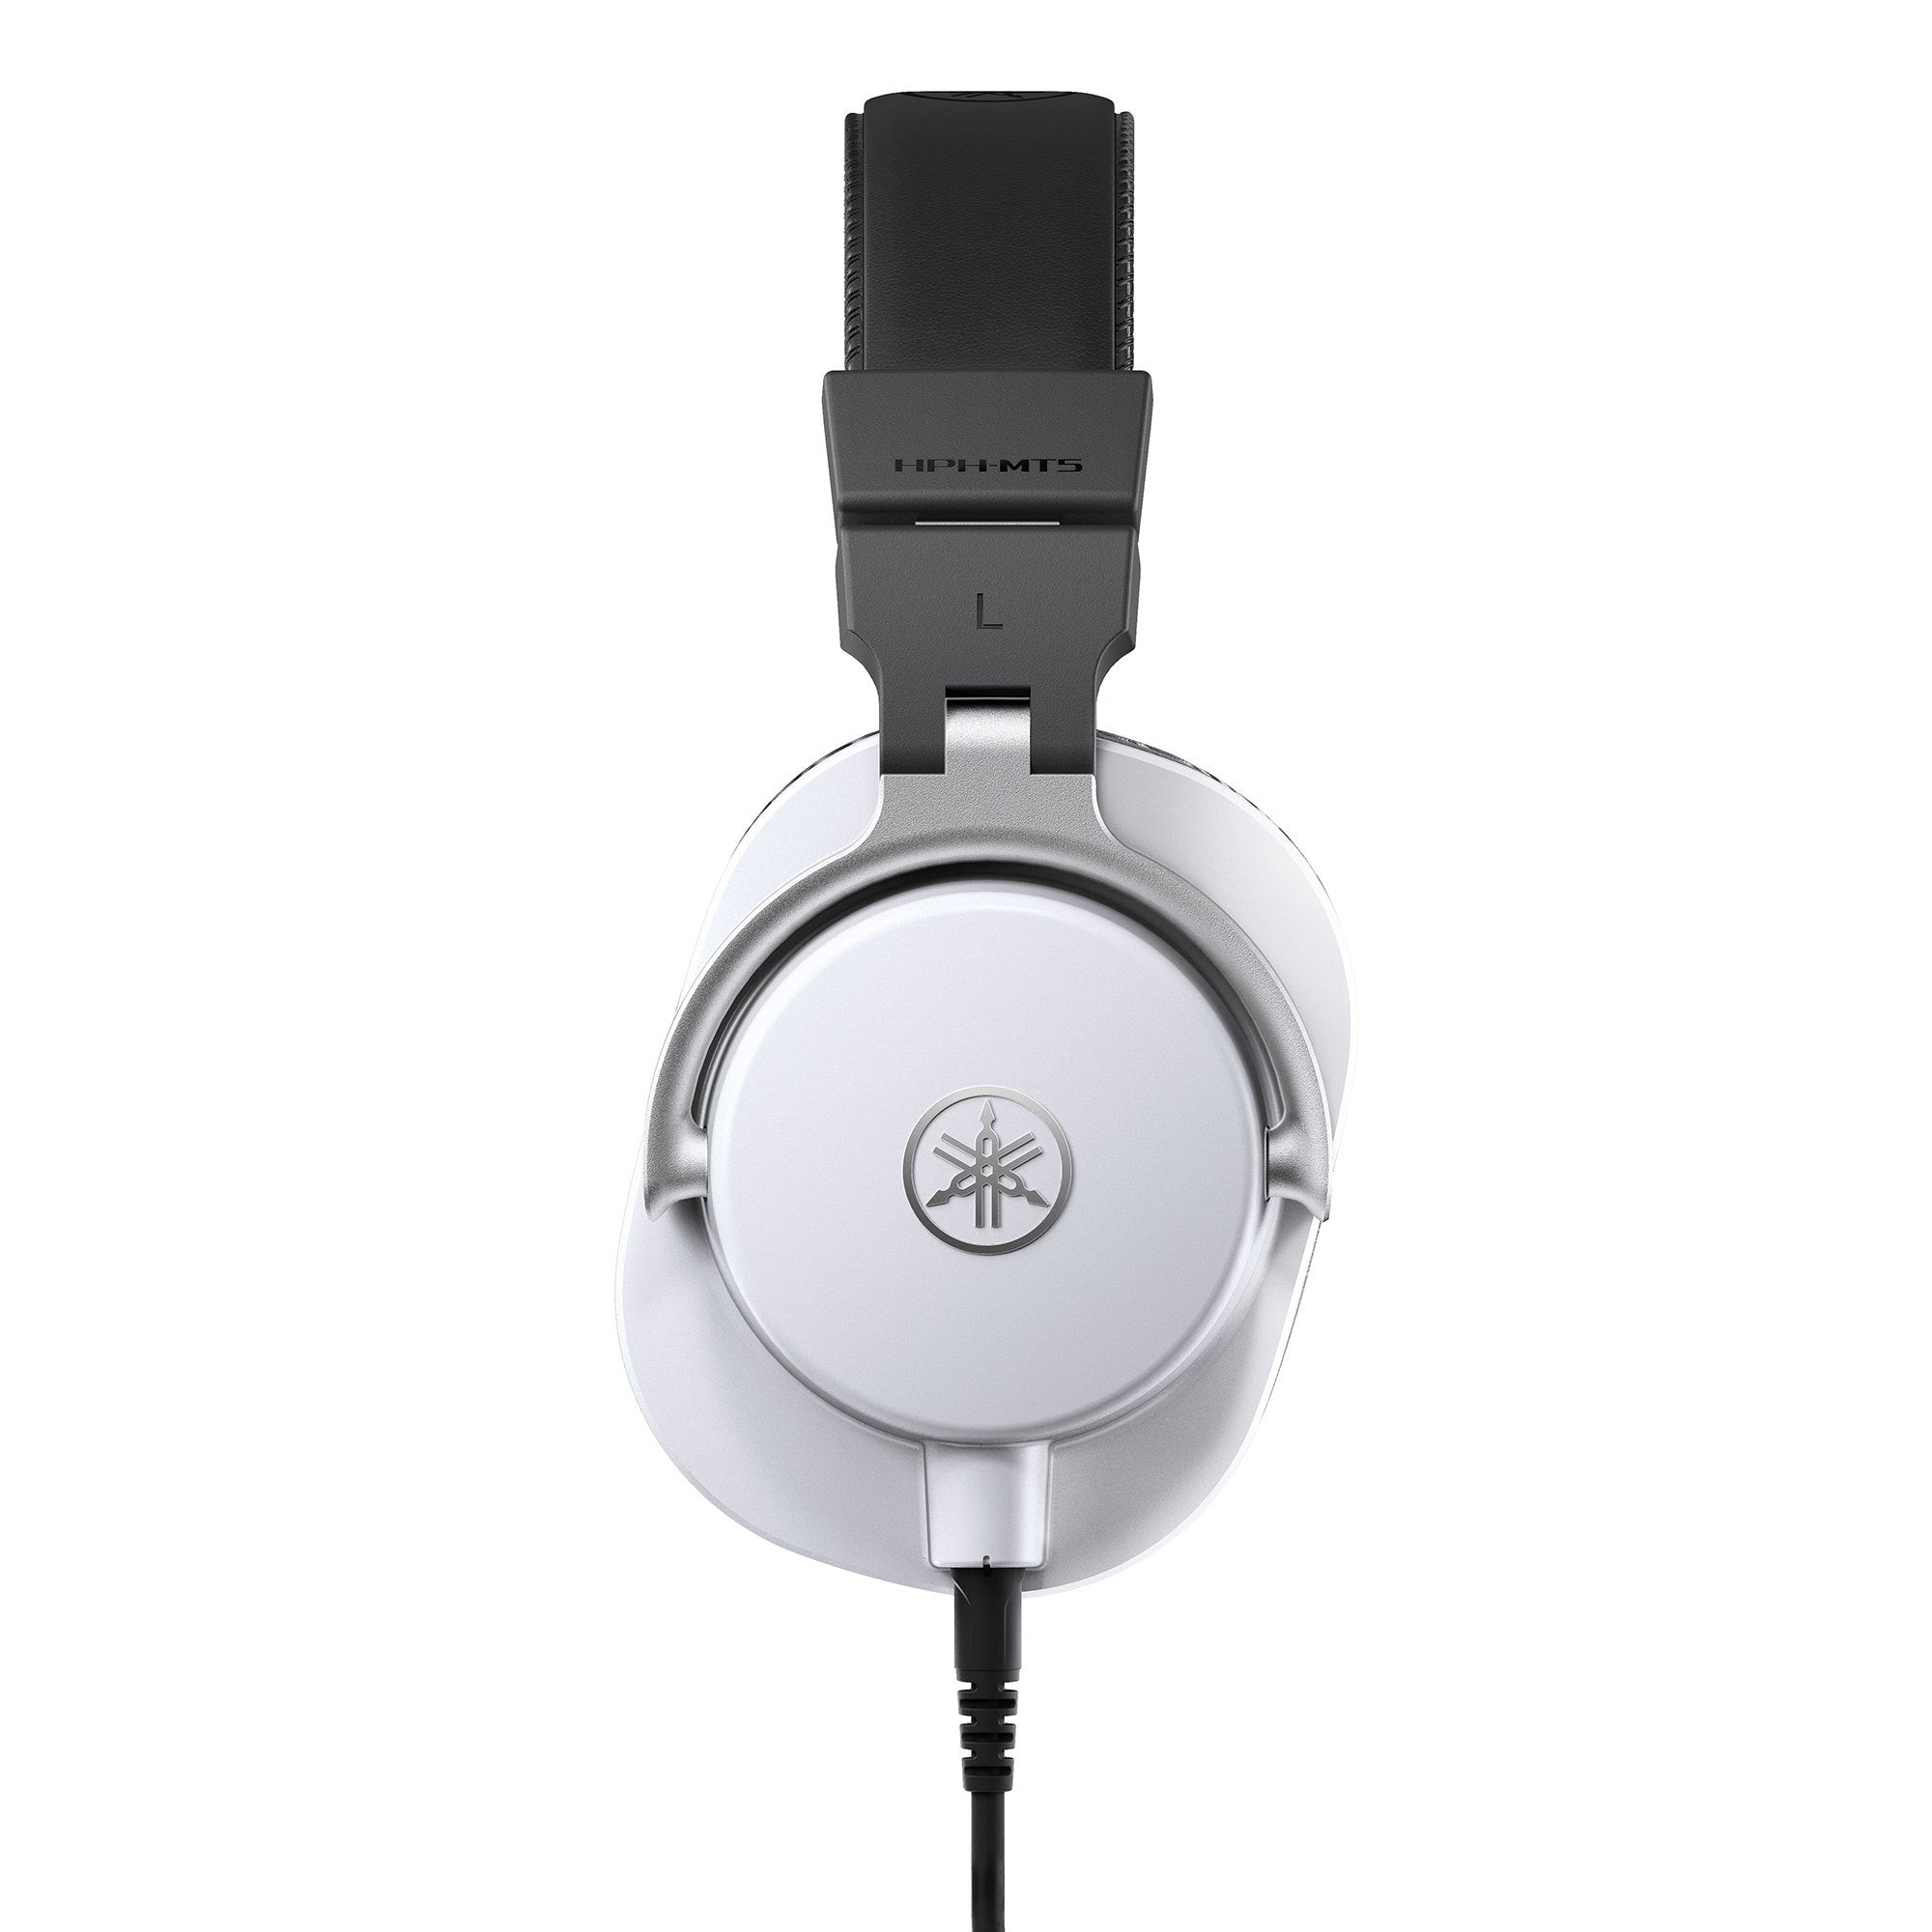 Yamaha HPH-MT5 Studio Monitor Over-Ear Headphones (Black / White)